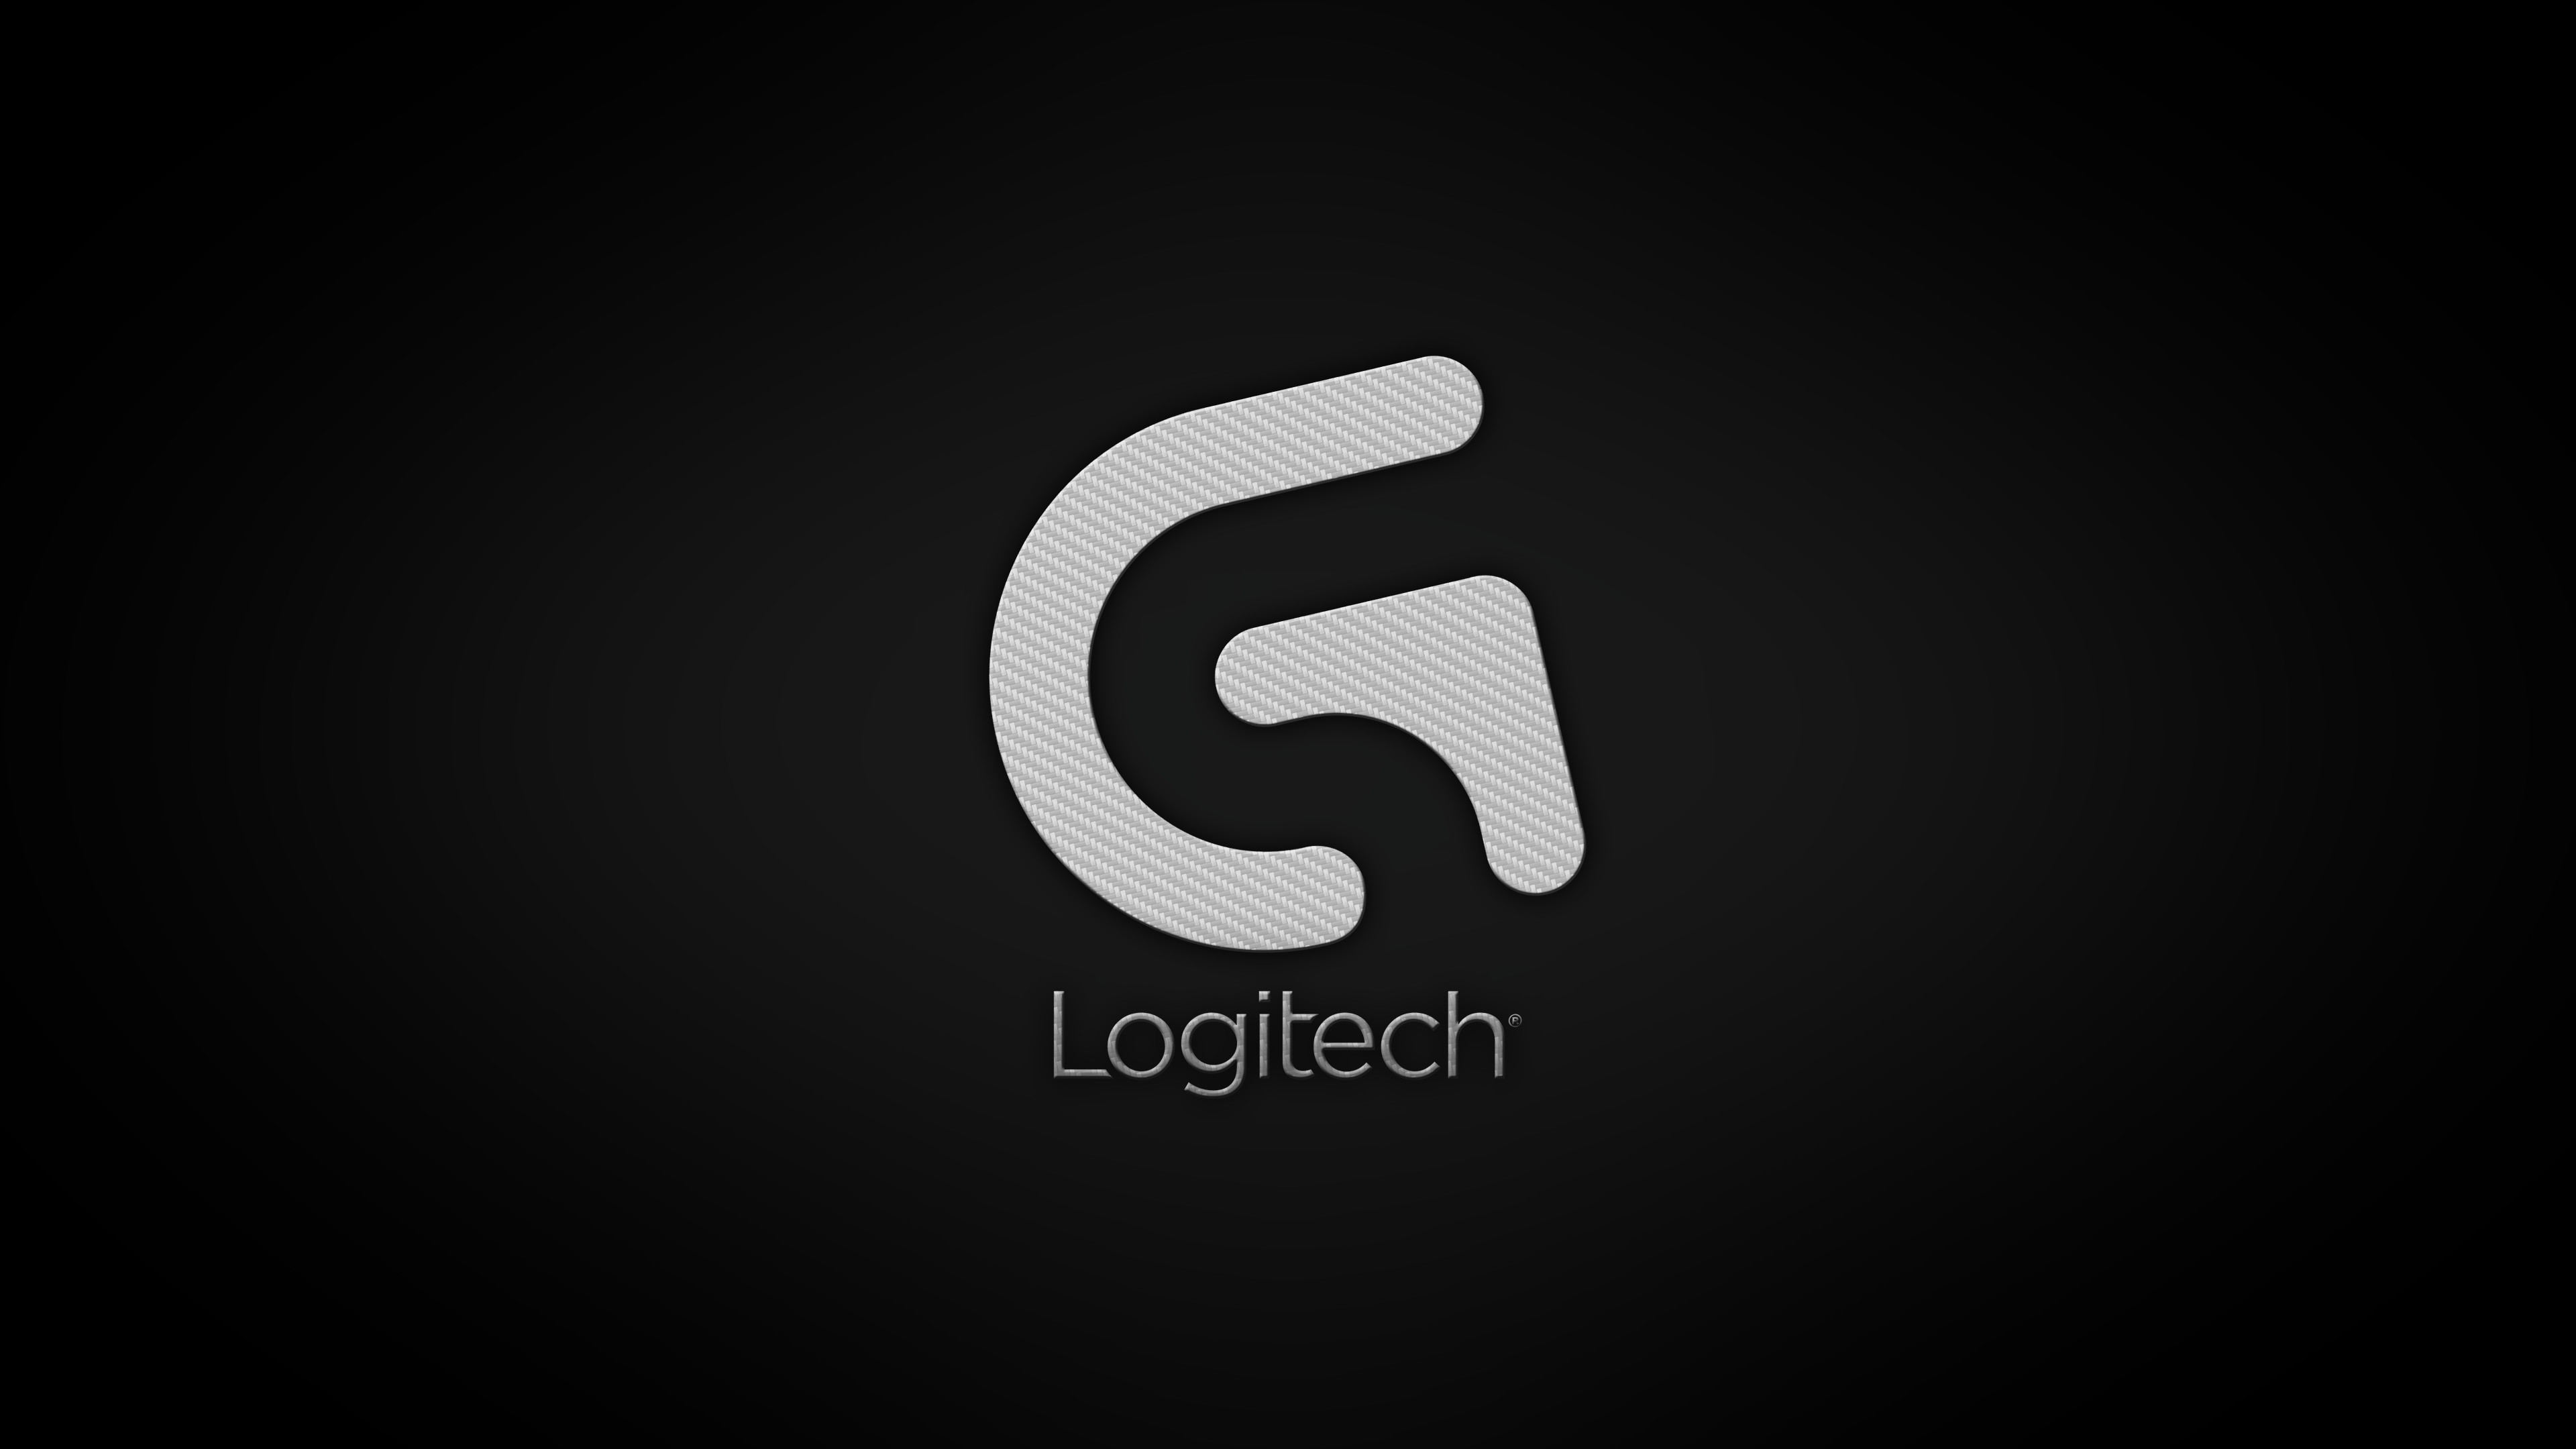 3840x2160 Logitech Brand Logo